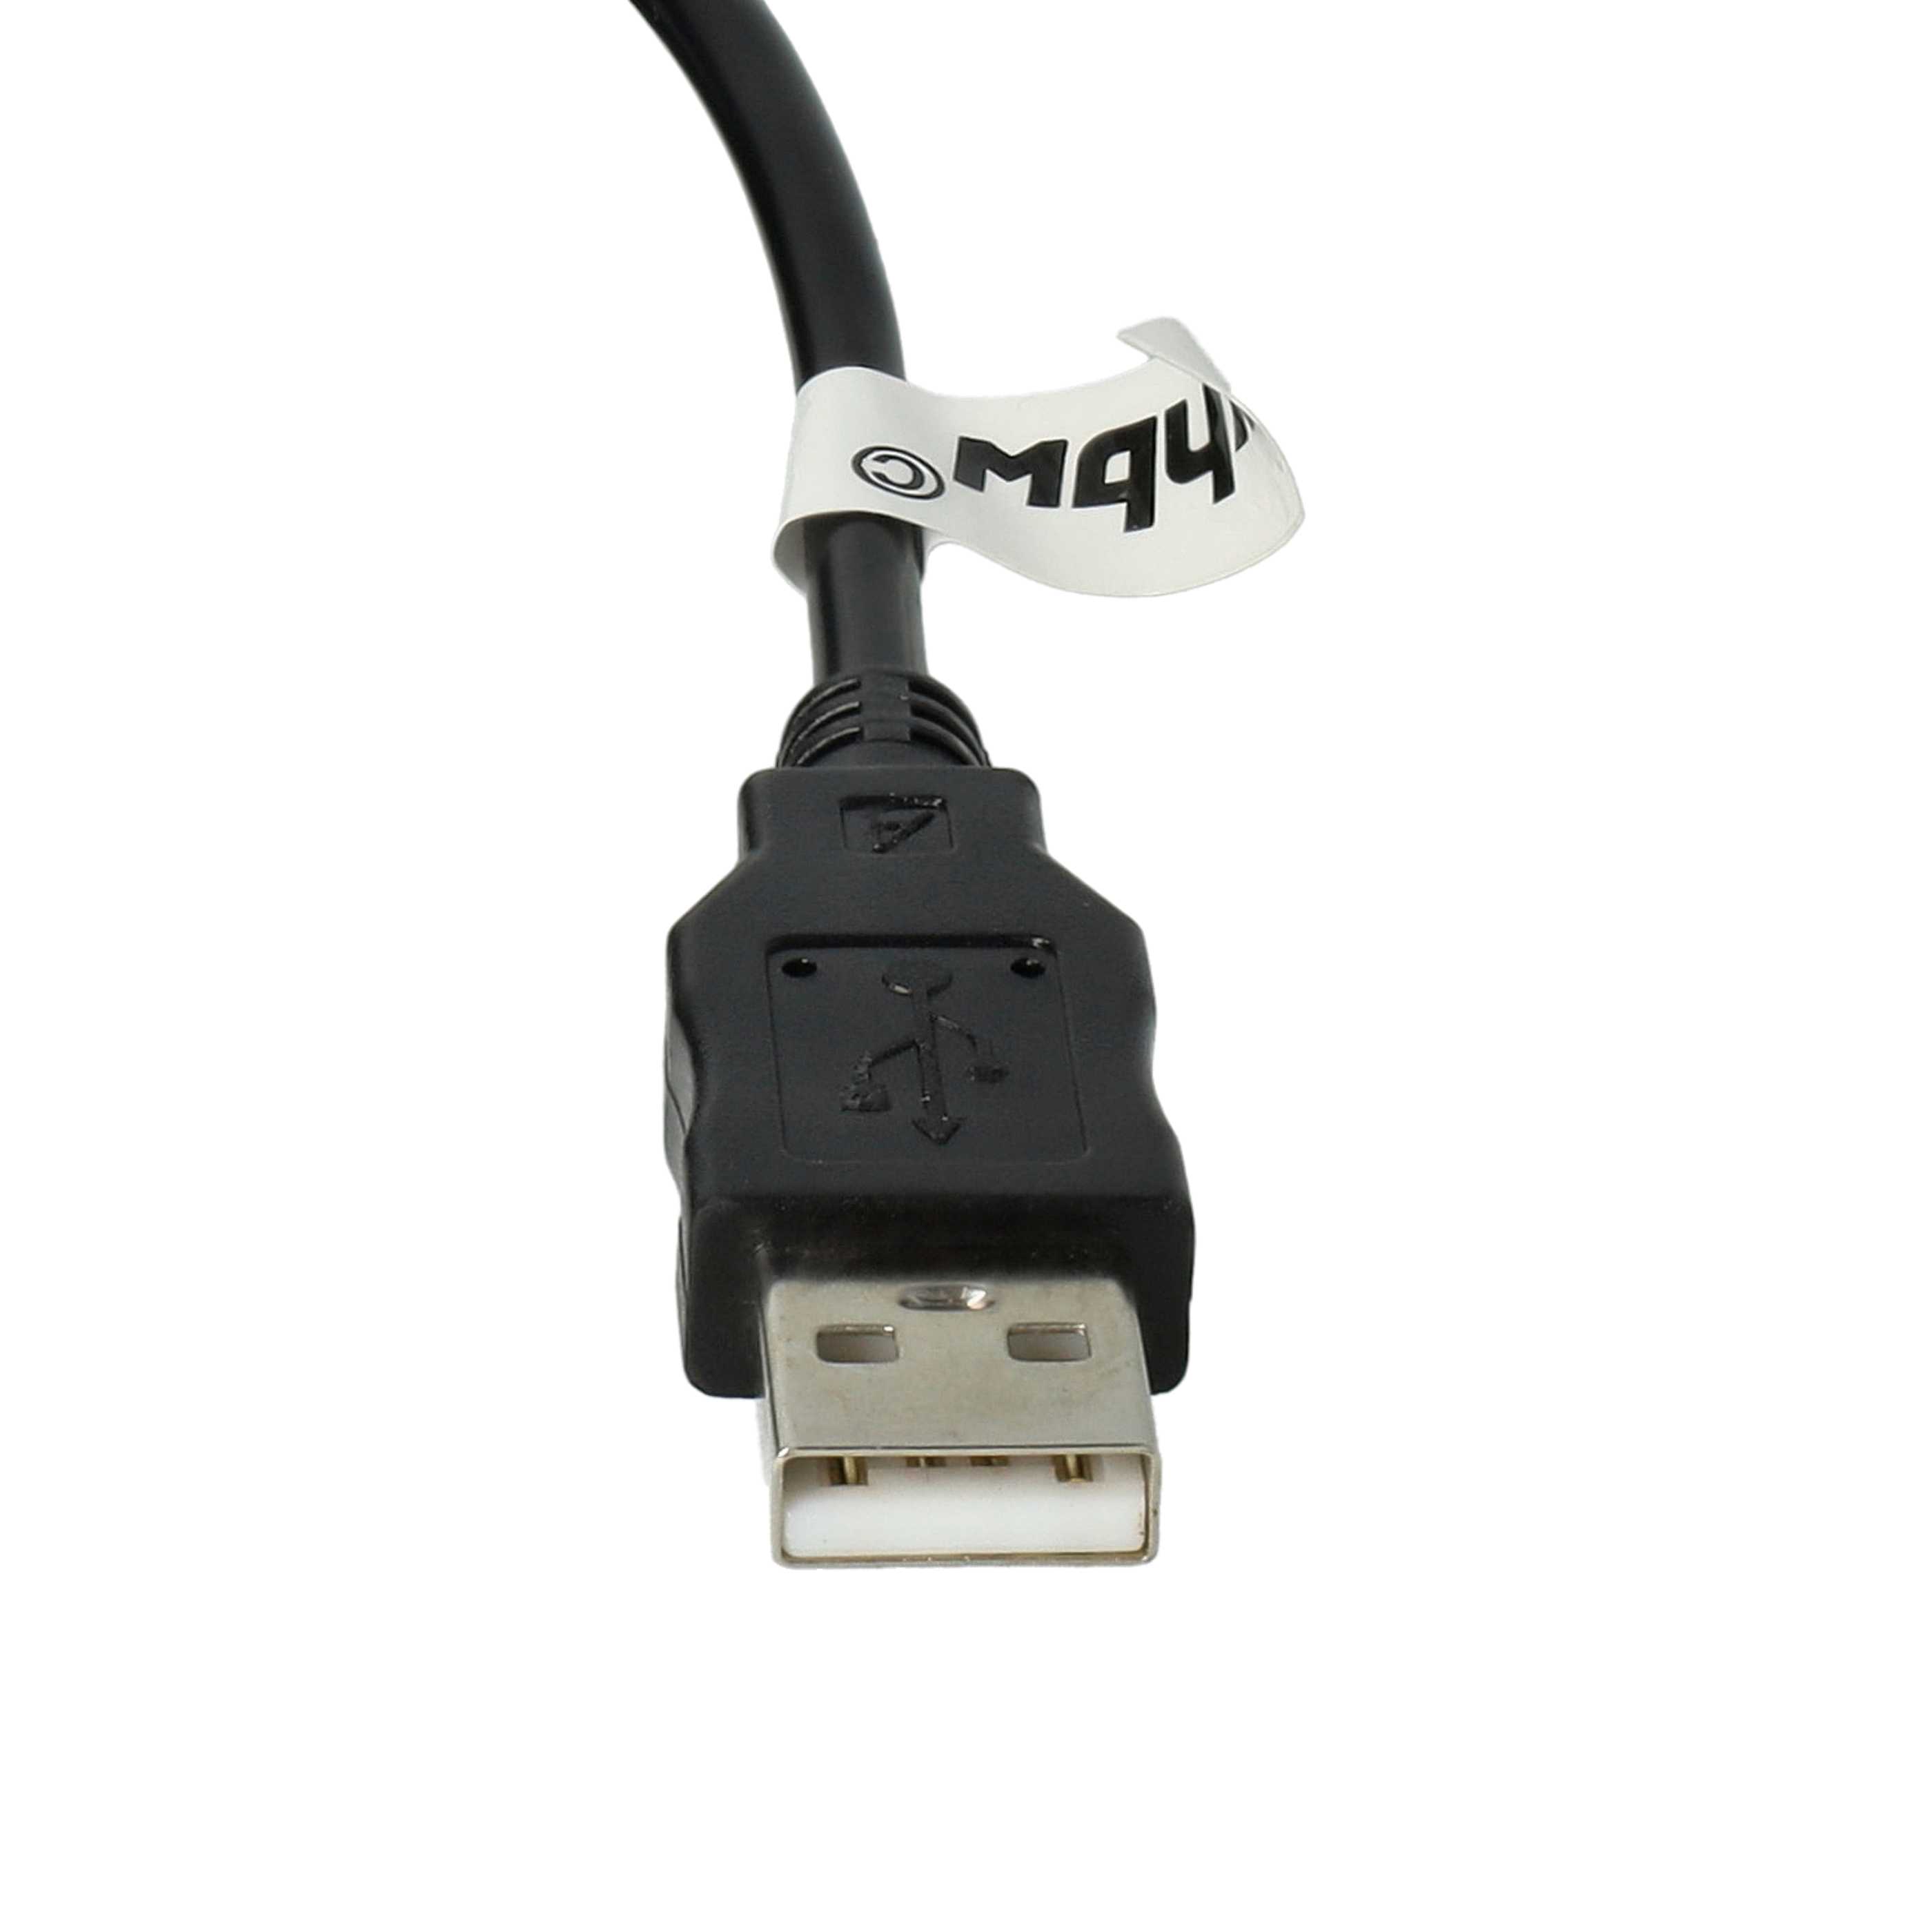 USB Datenkabel als Ersatz für Kodak U-8 Kamera - 150 cm